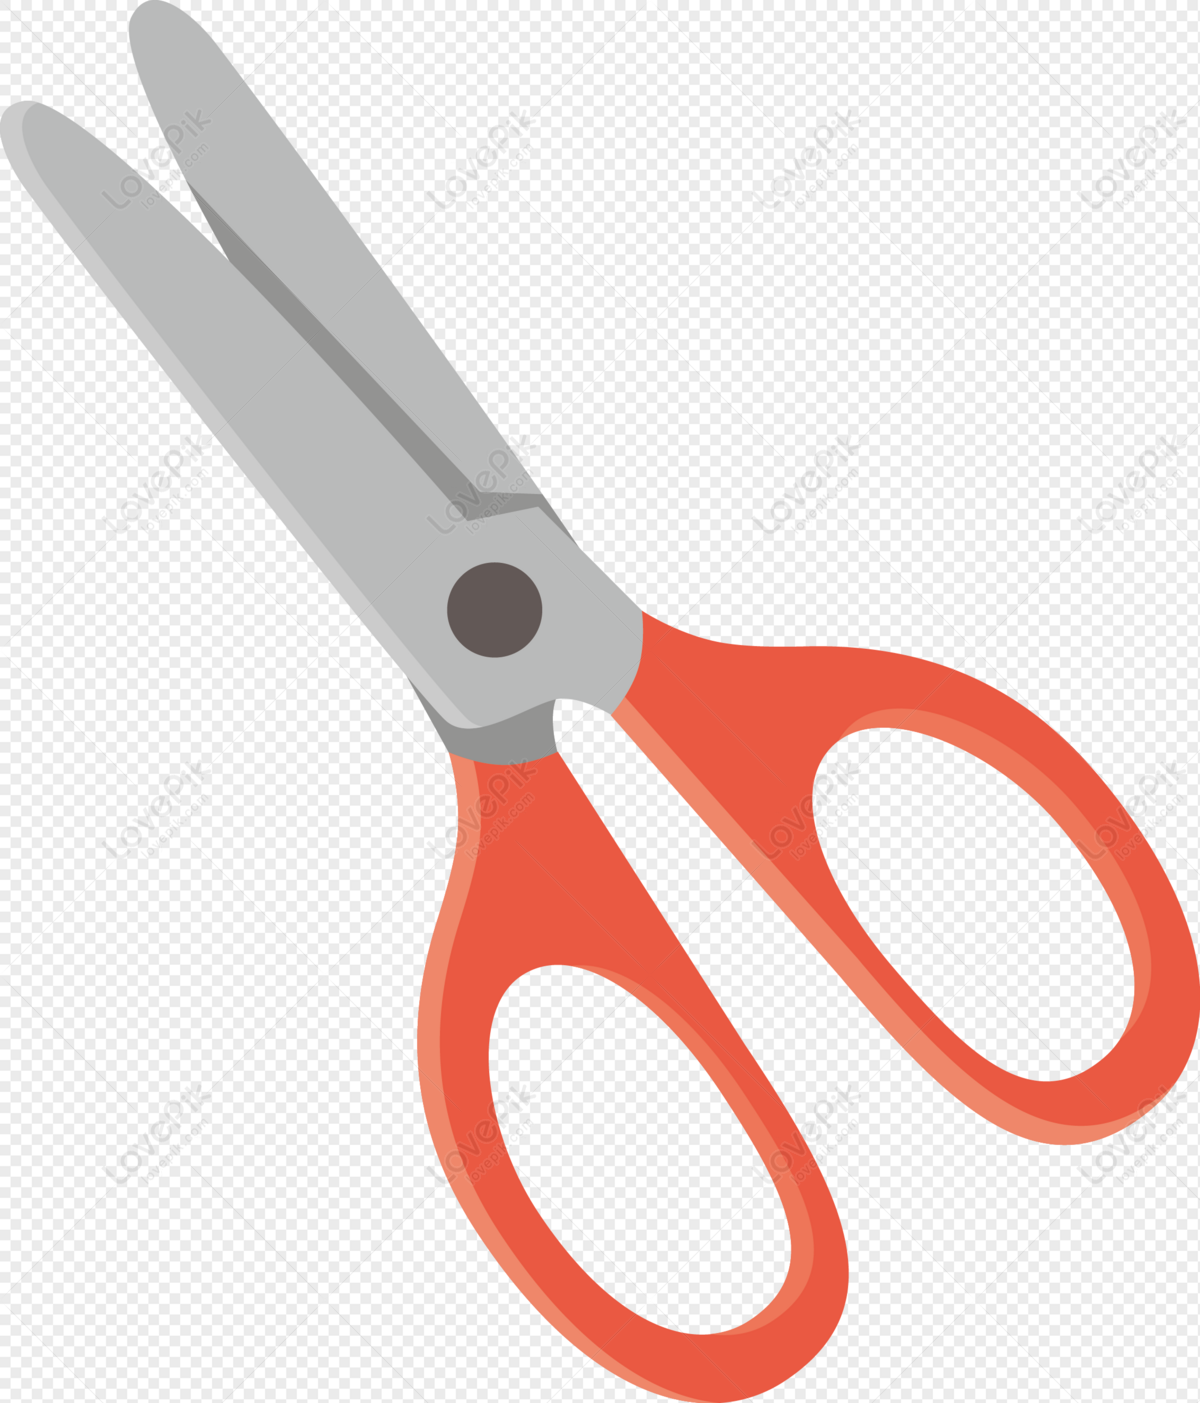 Premium Vector  Scissor black silhouette icon set needlework shear or  school and office different open scissors or c